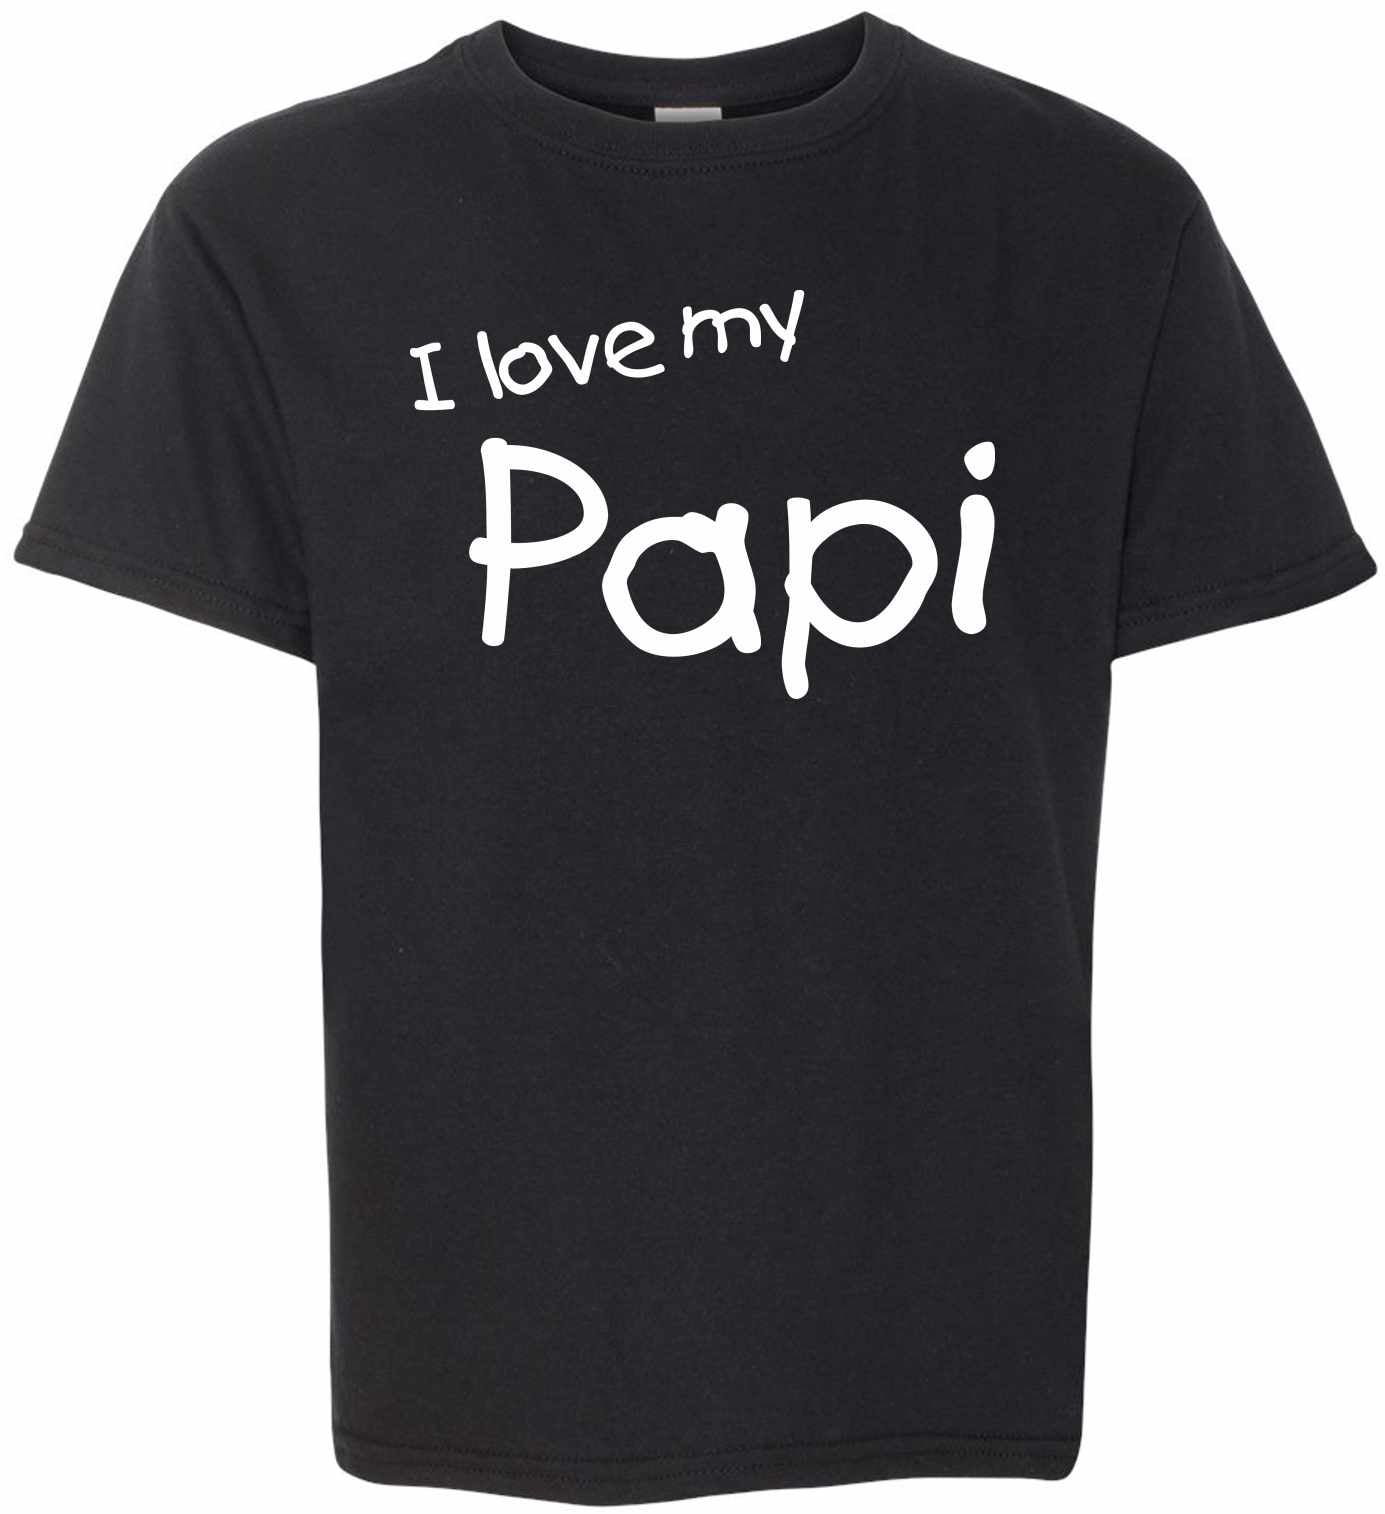 I Love My Papi on Kids T-Shirt (#1126-201)